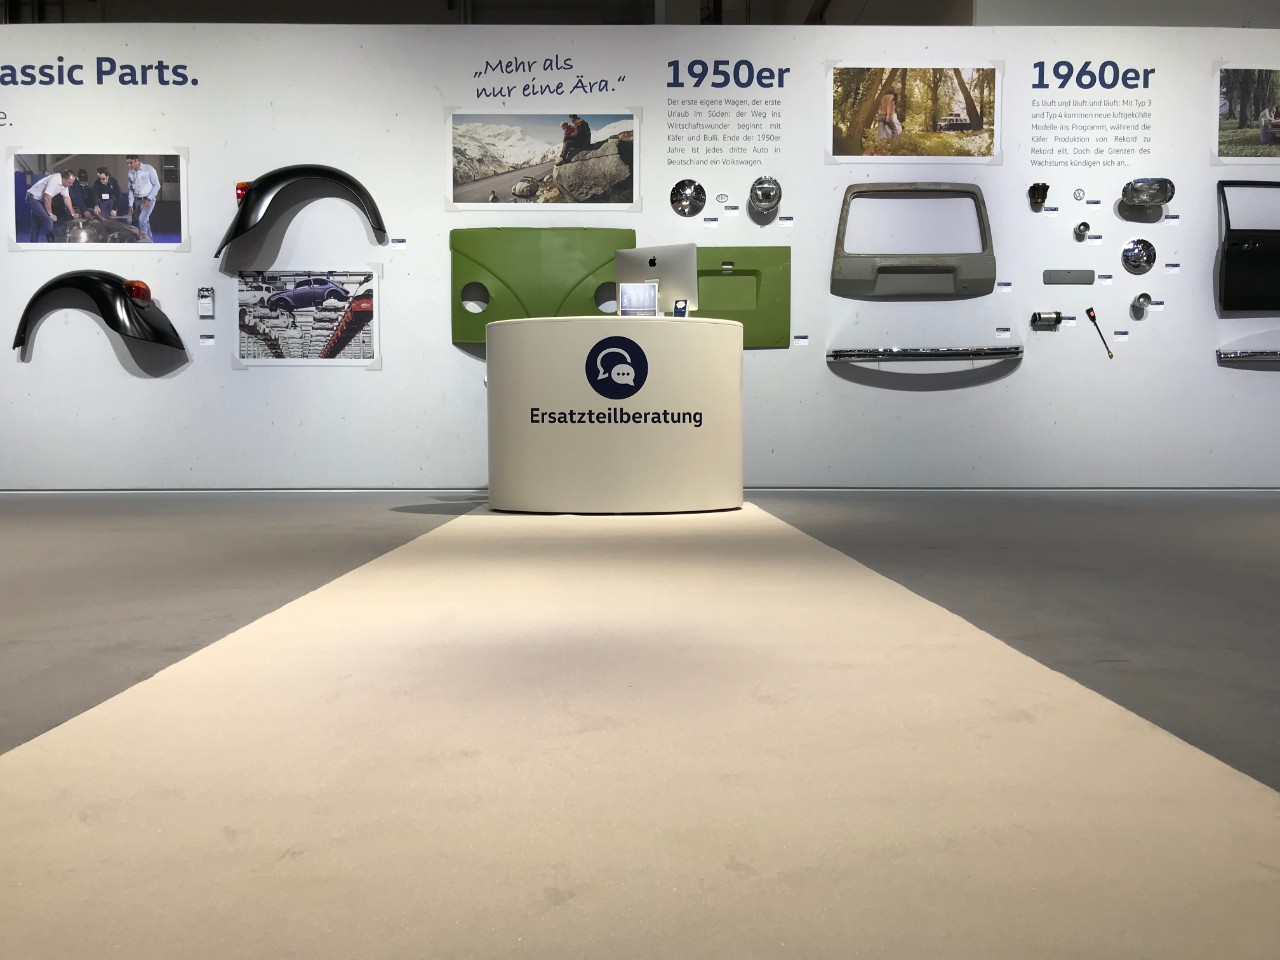 Volkswagen Classic Parts - Techno Classica Essen 2019